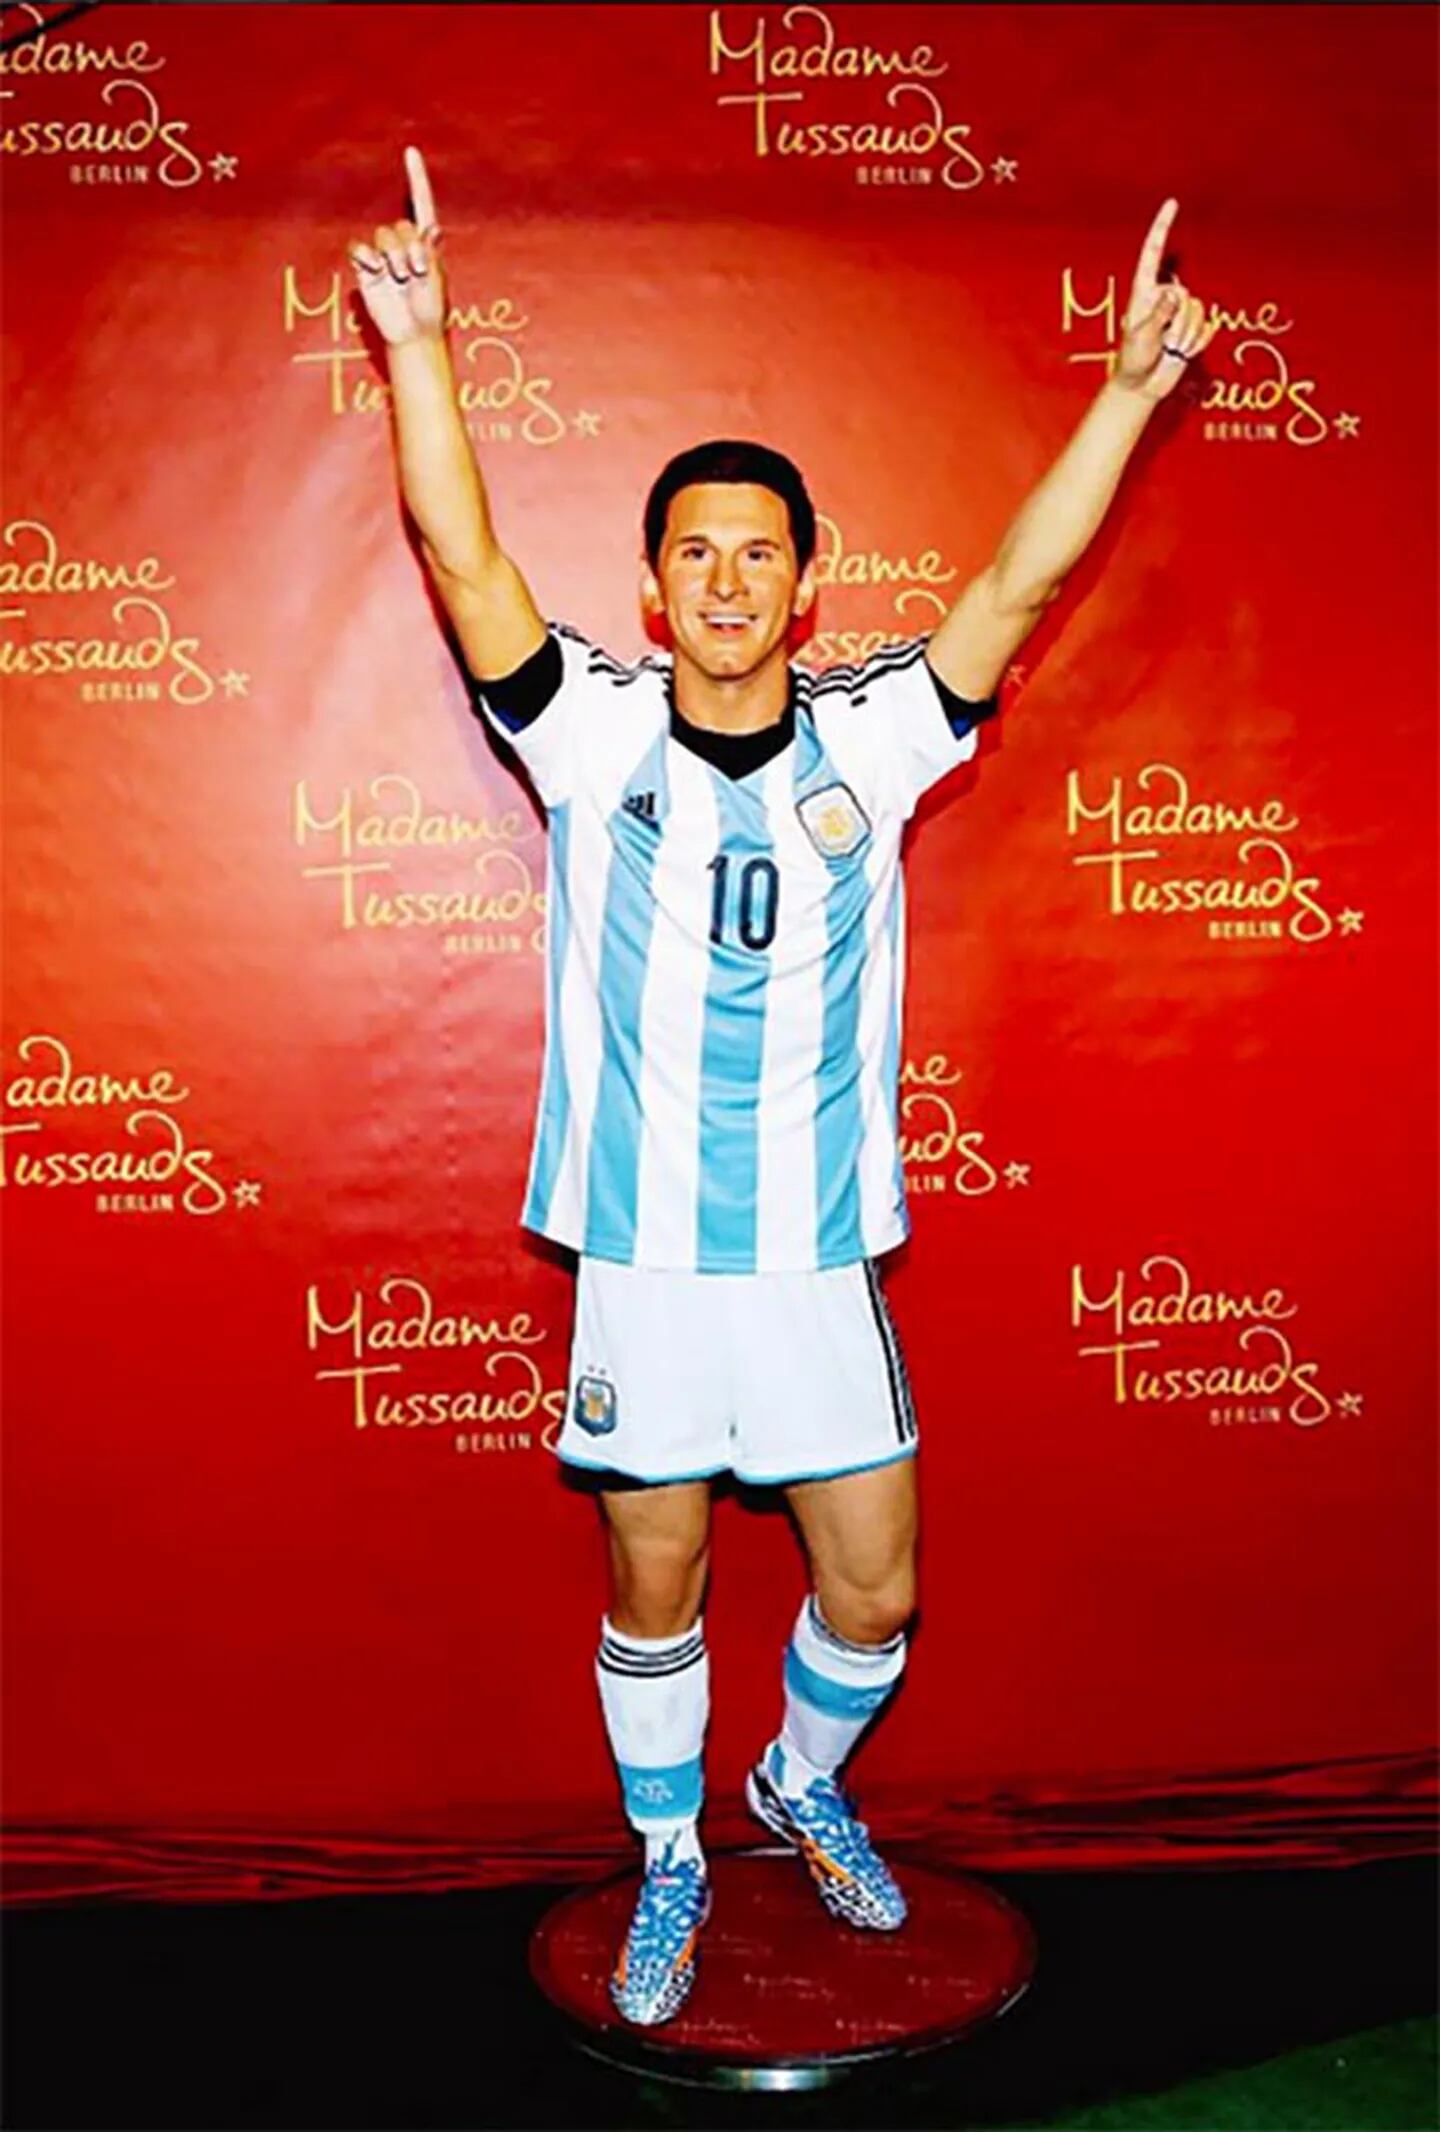 La estatua de Messi en el museo Madame Tussauds. (Foto: Twitter @teamLionelmessi)